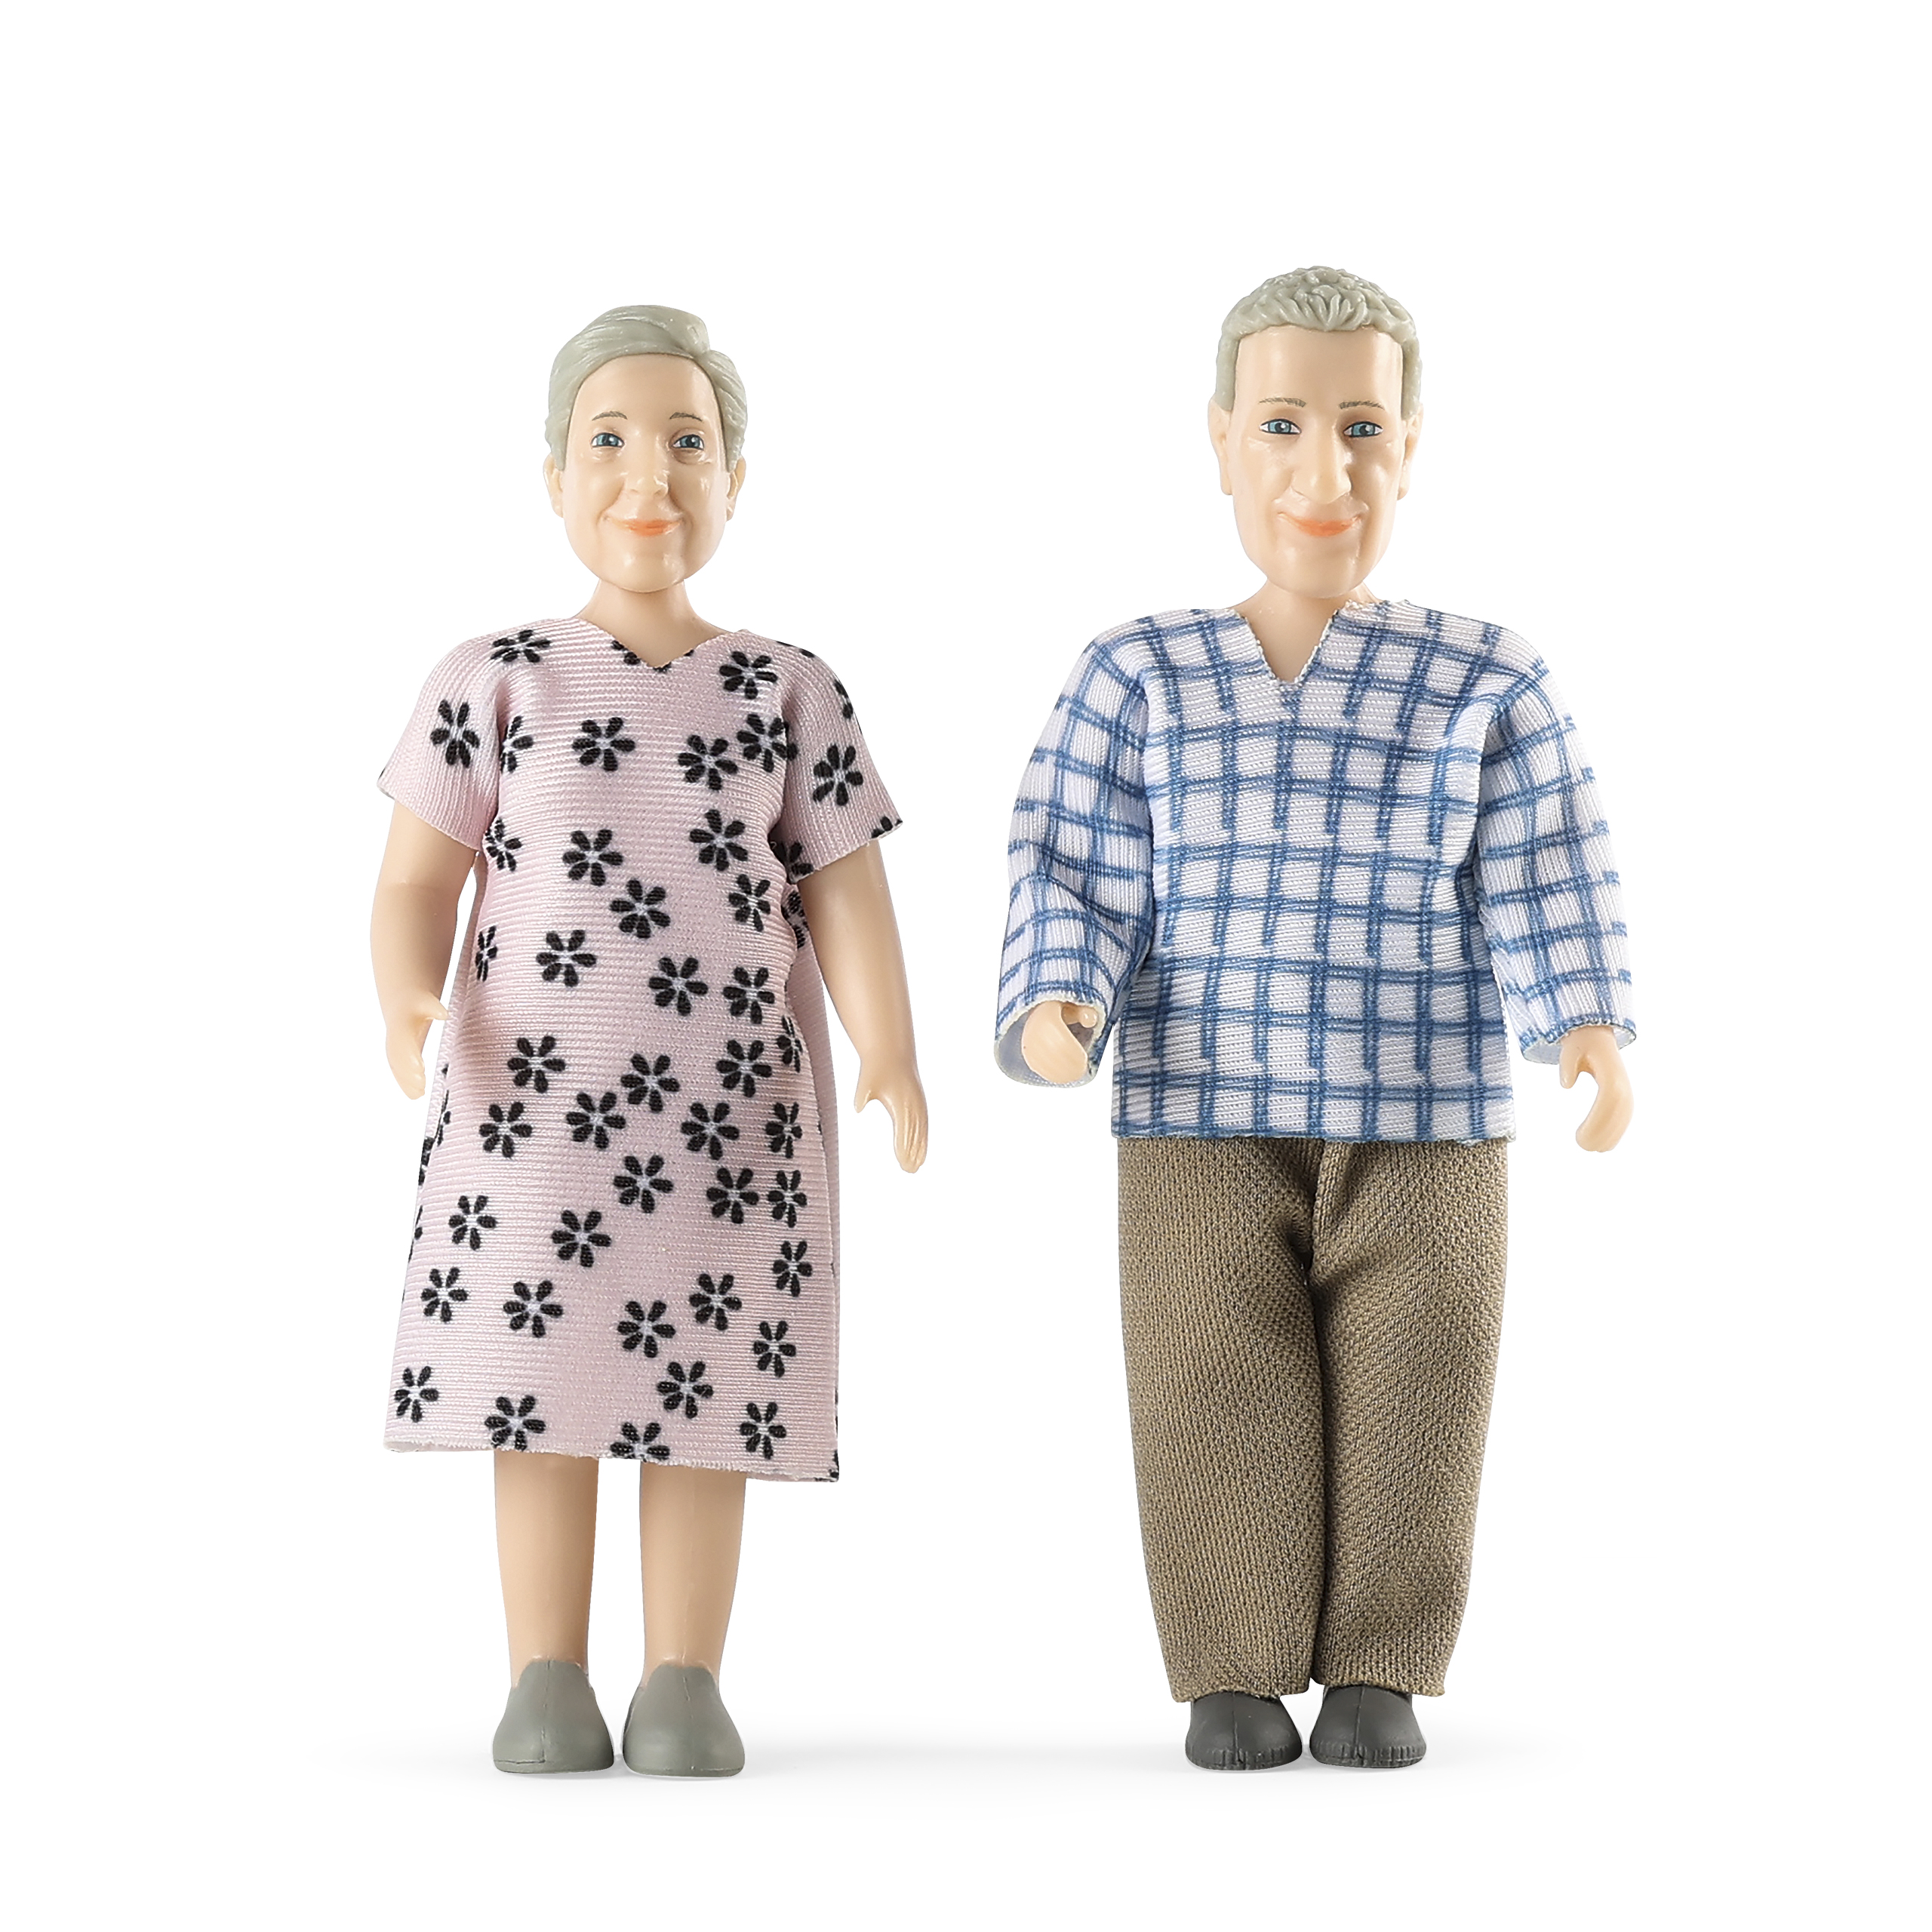 Lundby lundby	dollshouse dolls elderly couple charlie